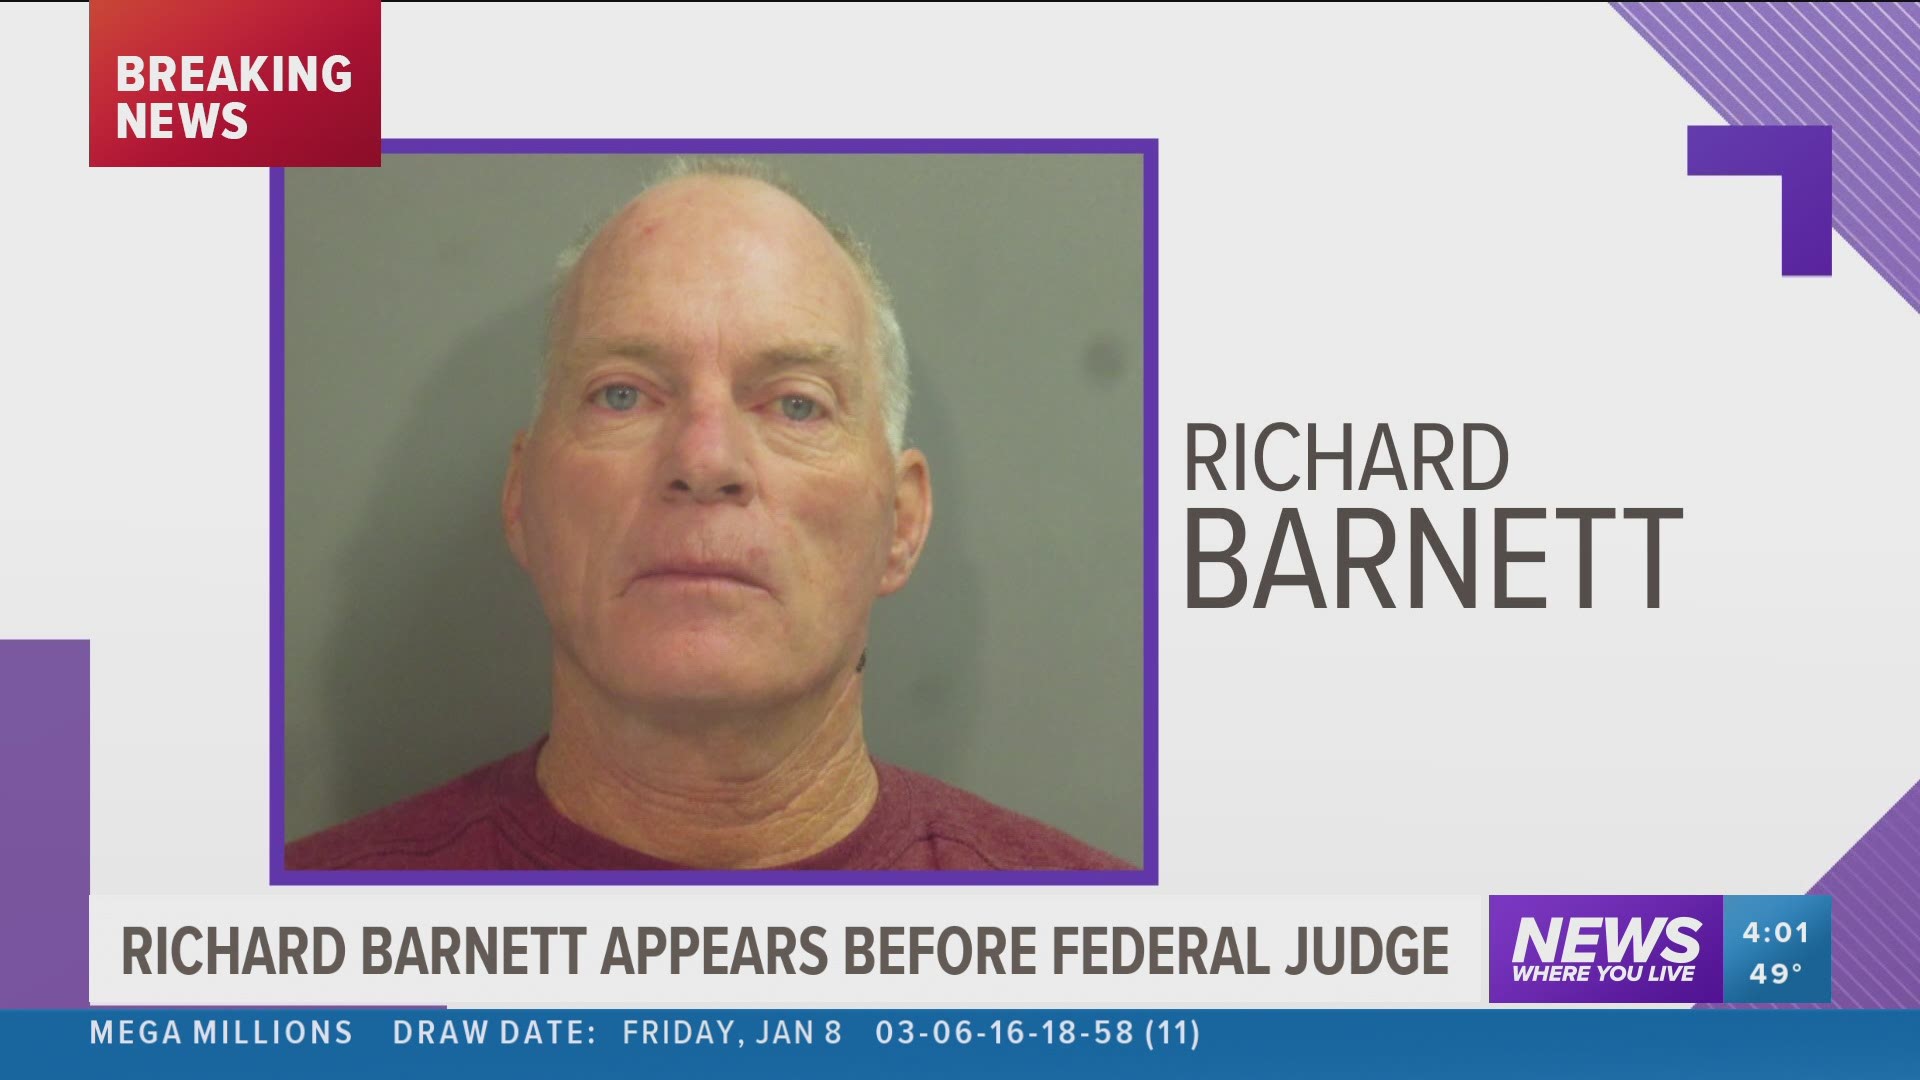 Richard Barnett appears before federal judge